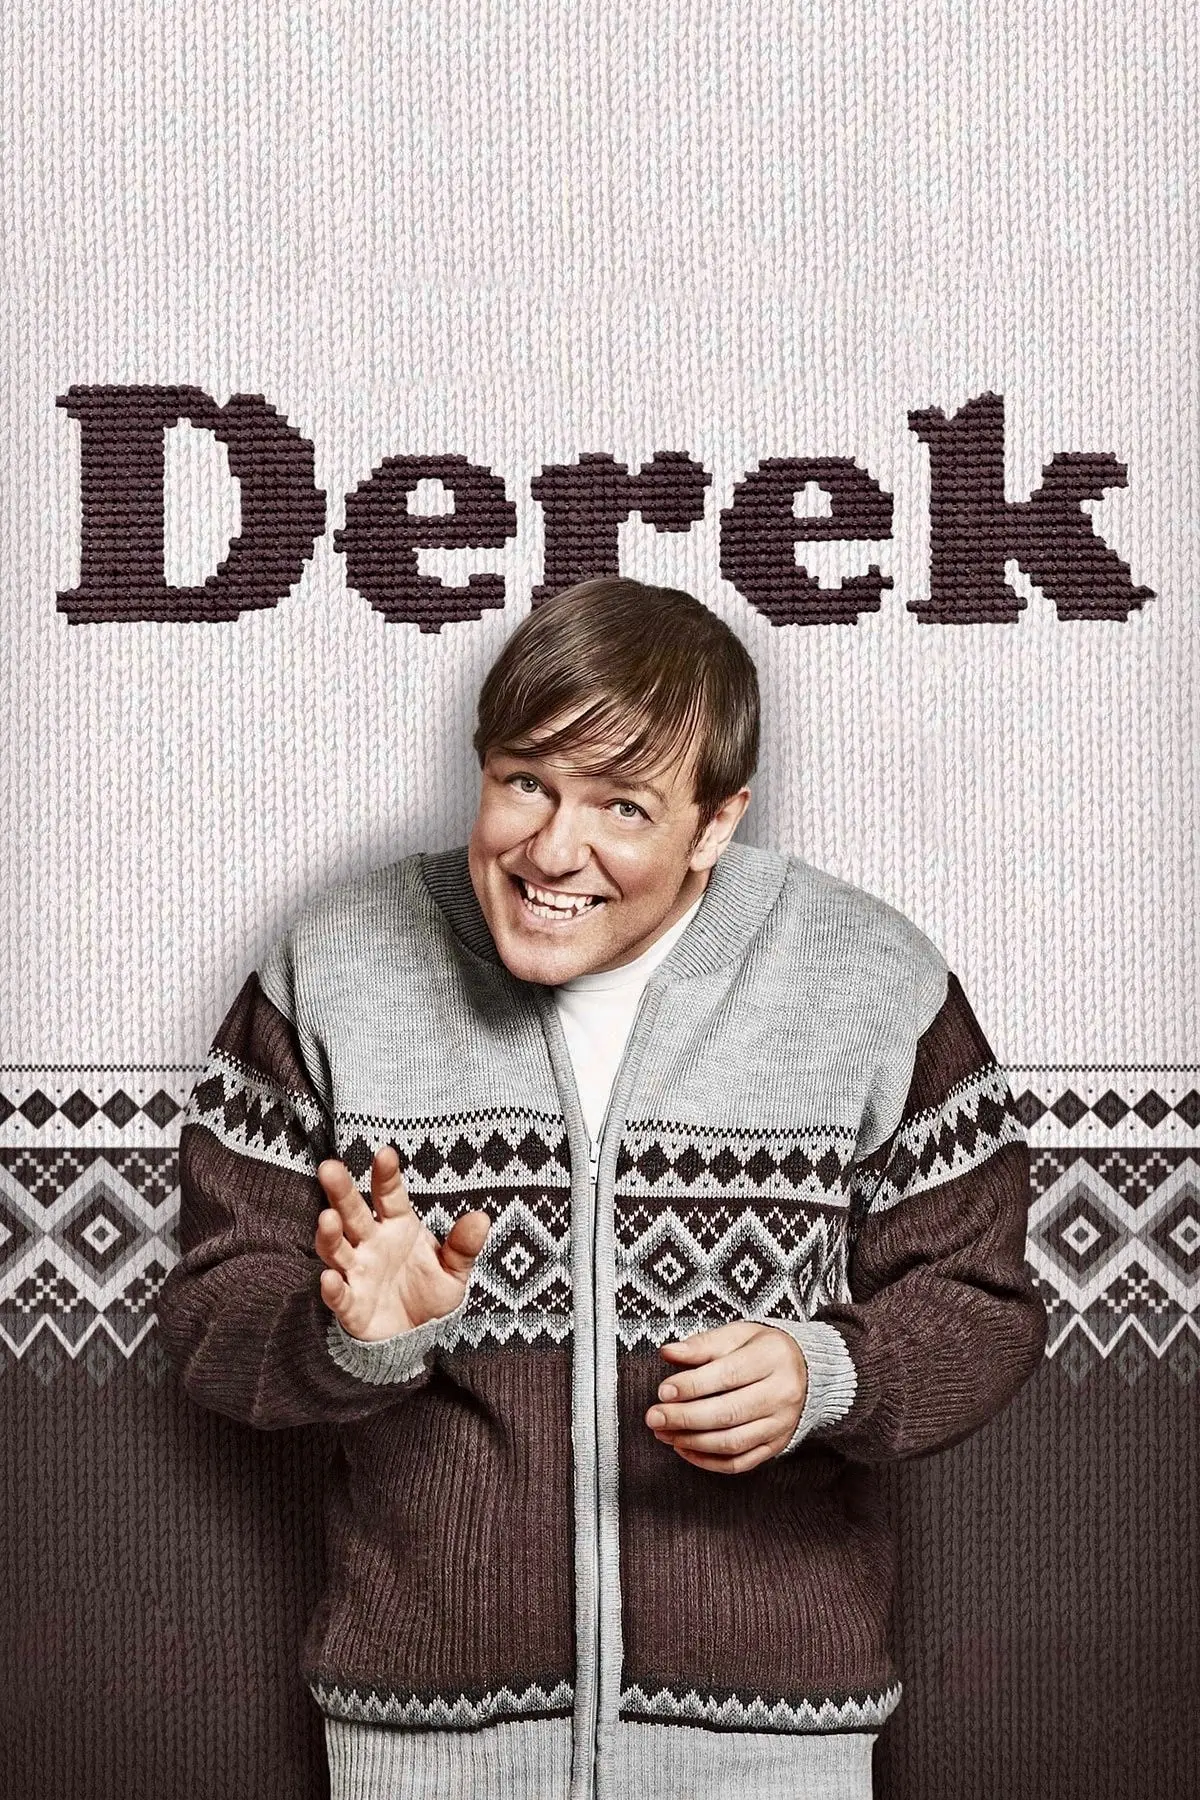 Derek S02E01 Épisode 1